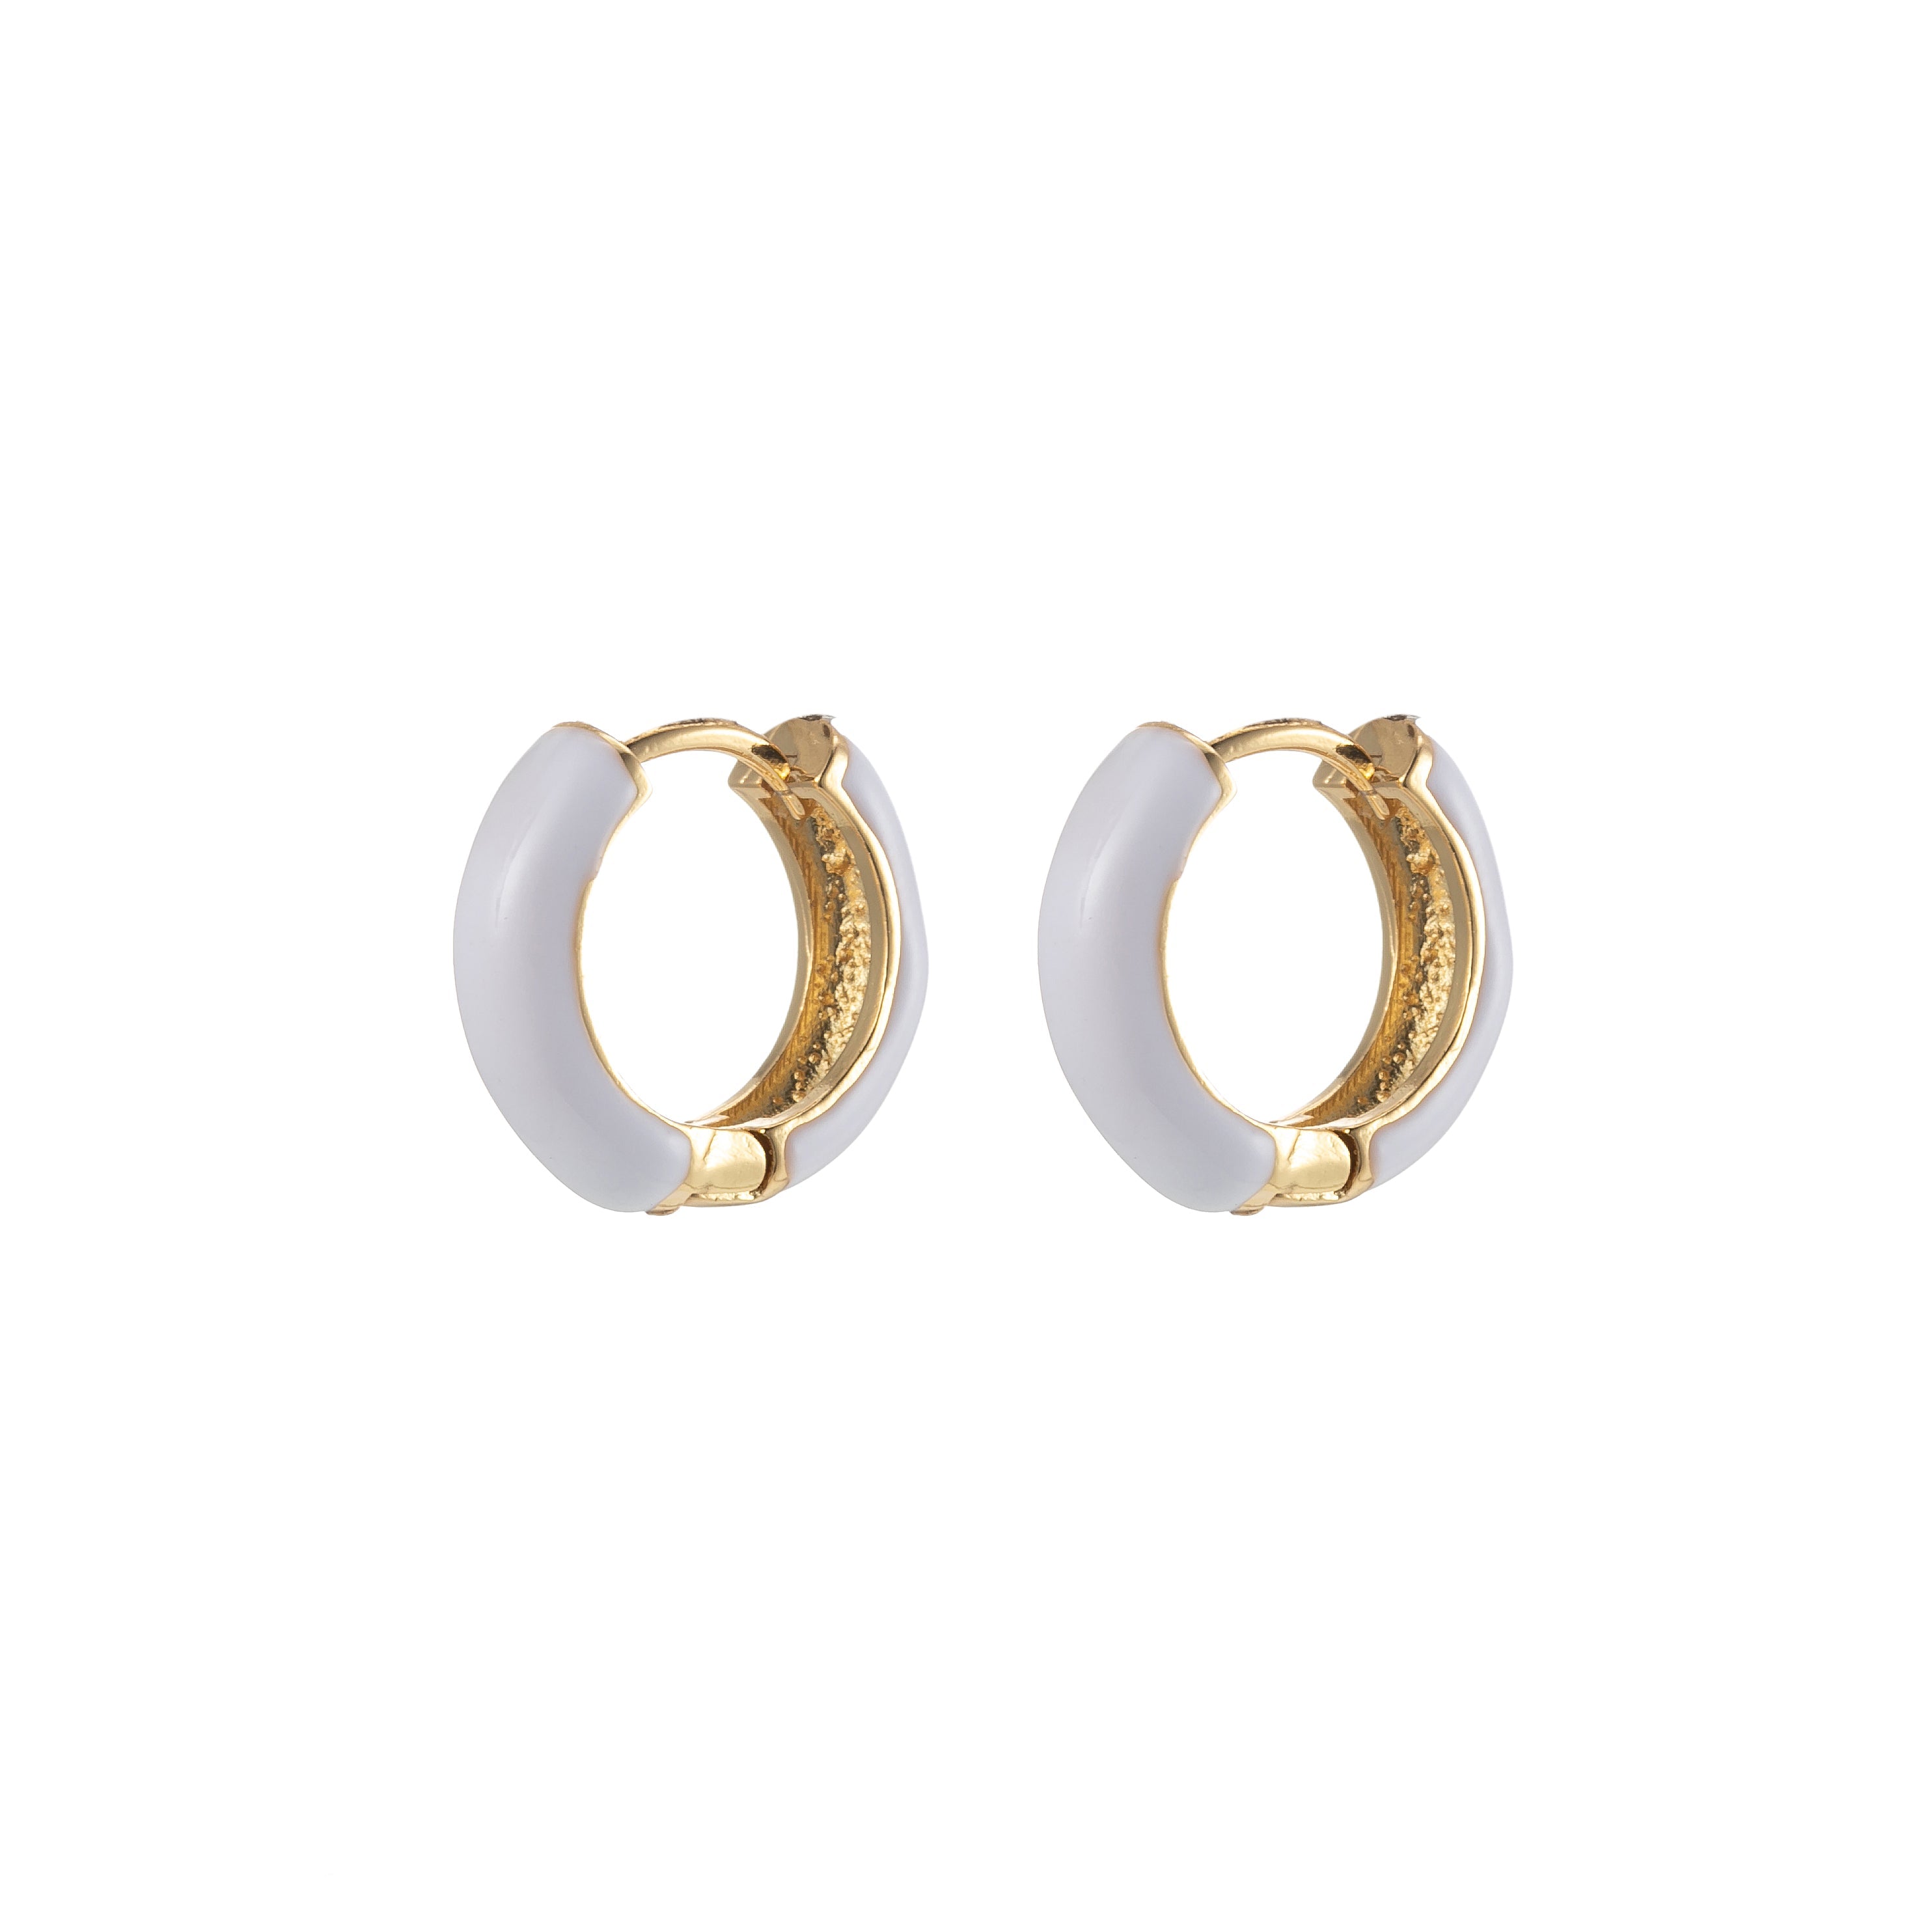 14mm Huggie Earring Colorful Neon Enamel Gold Multi Color Small Hoops Y2K Jewelry - DLUXCA